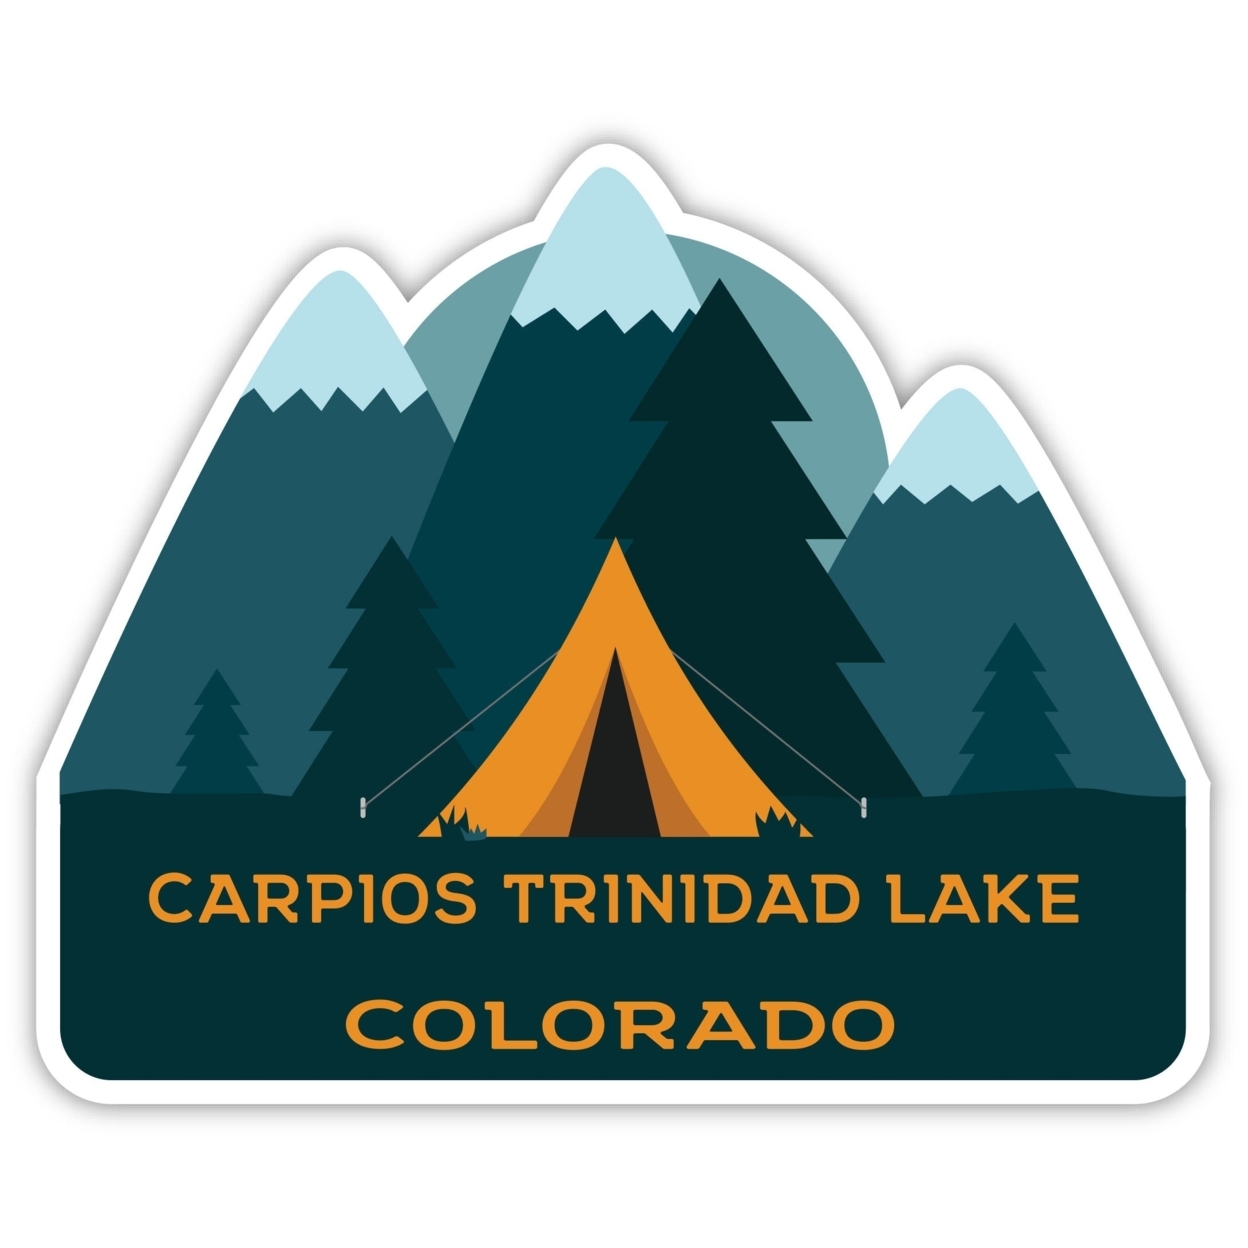 Carpios Trinidad Lake Colorado Souvenir Decorative Stickers (Choose Theme And Size) - Single Unit, 2-Inch, Tent